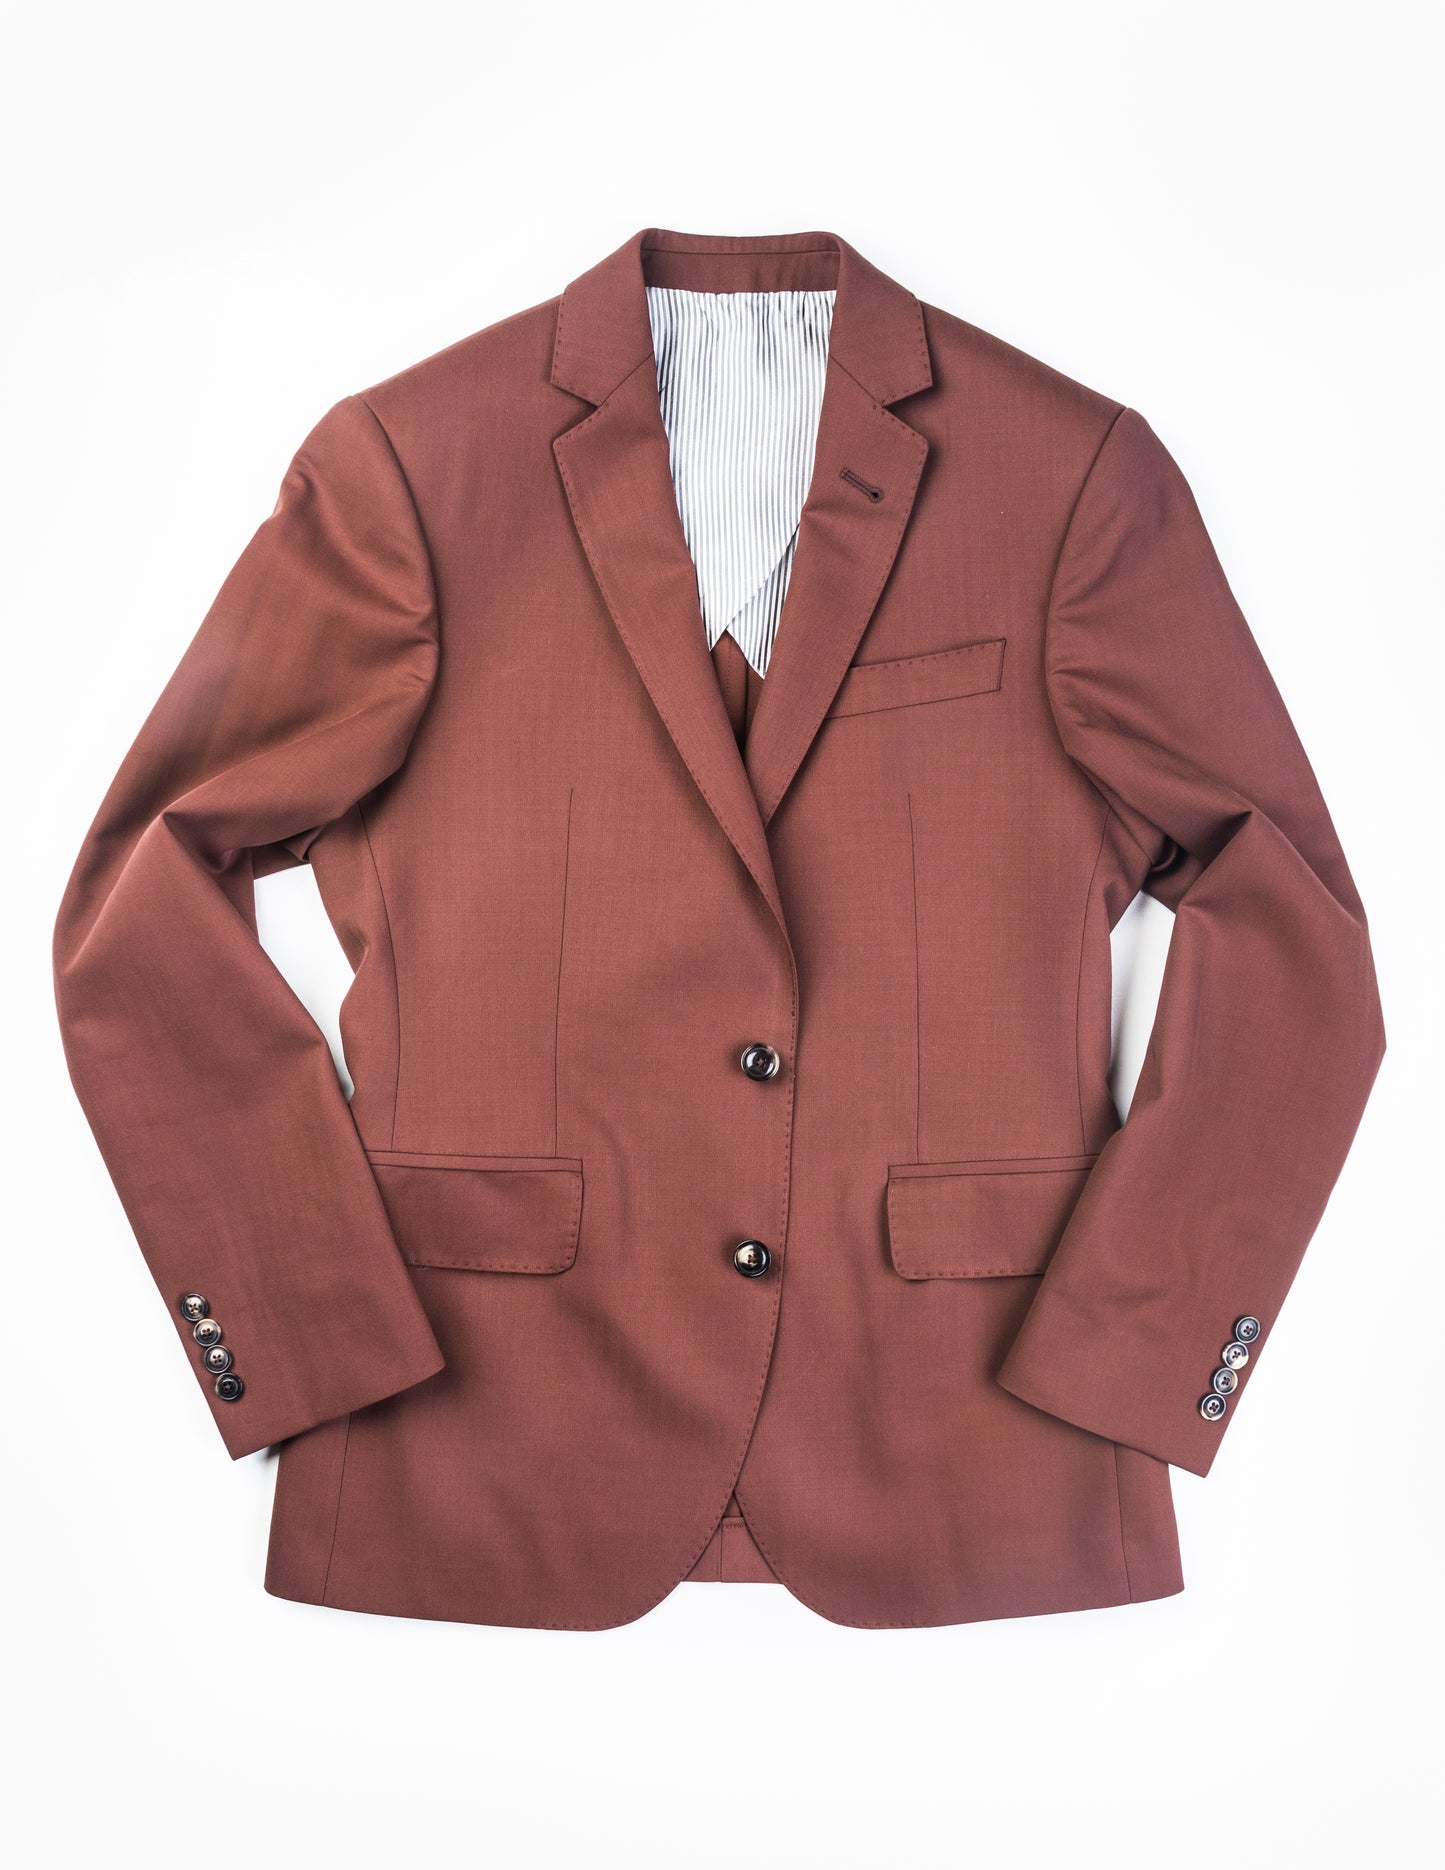 BKT50 Tailored Jacket in Herringbone Wool/Cotton - Brick